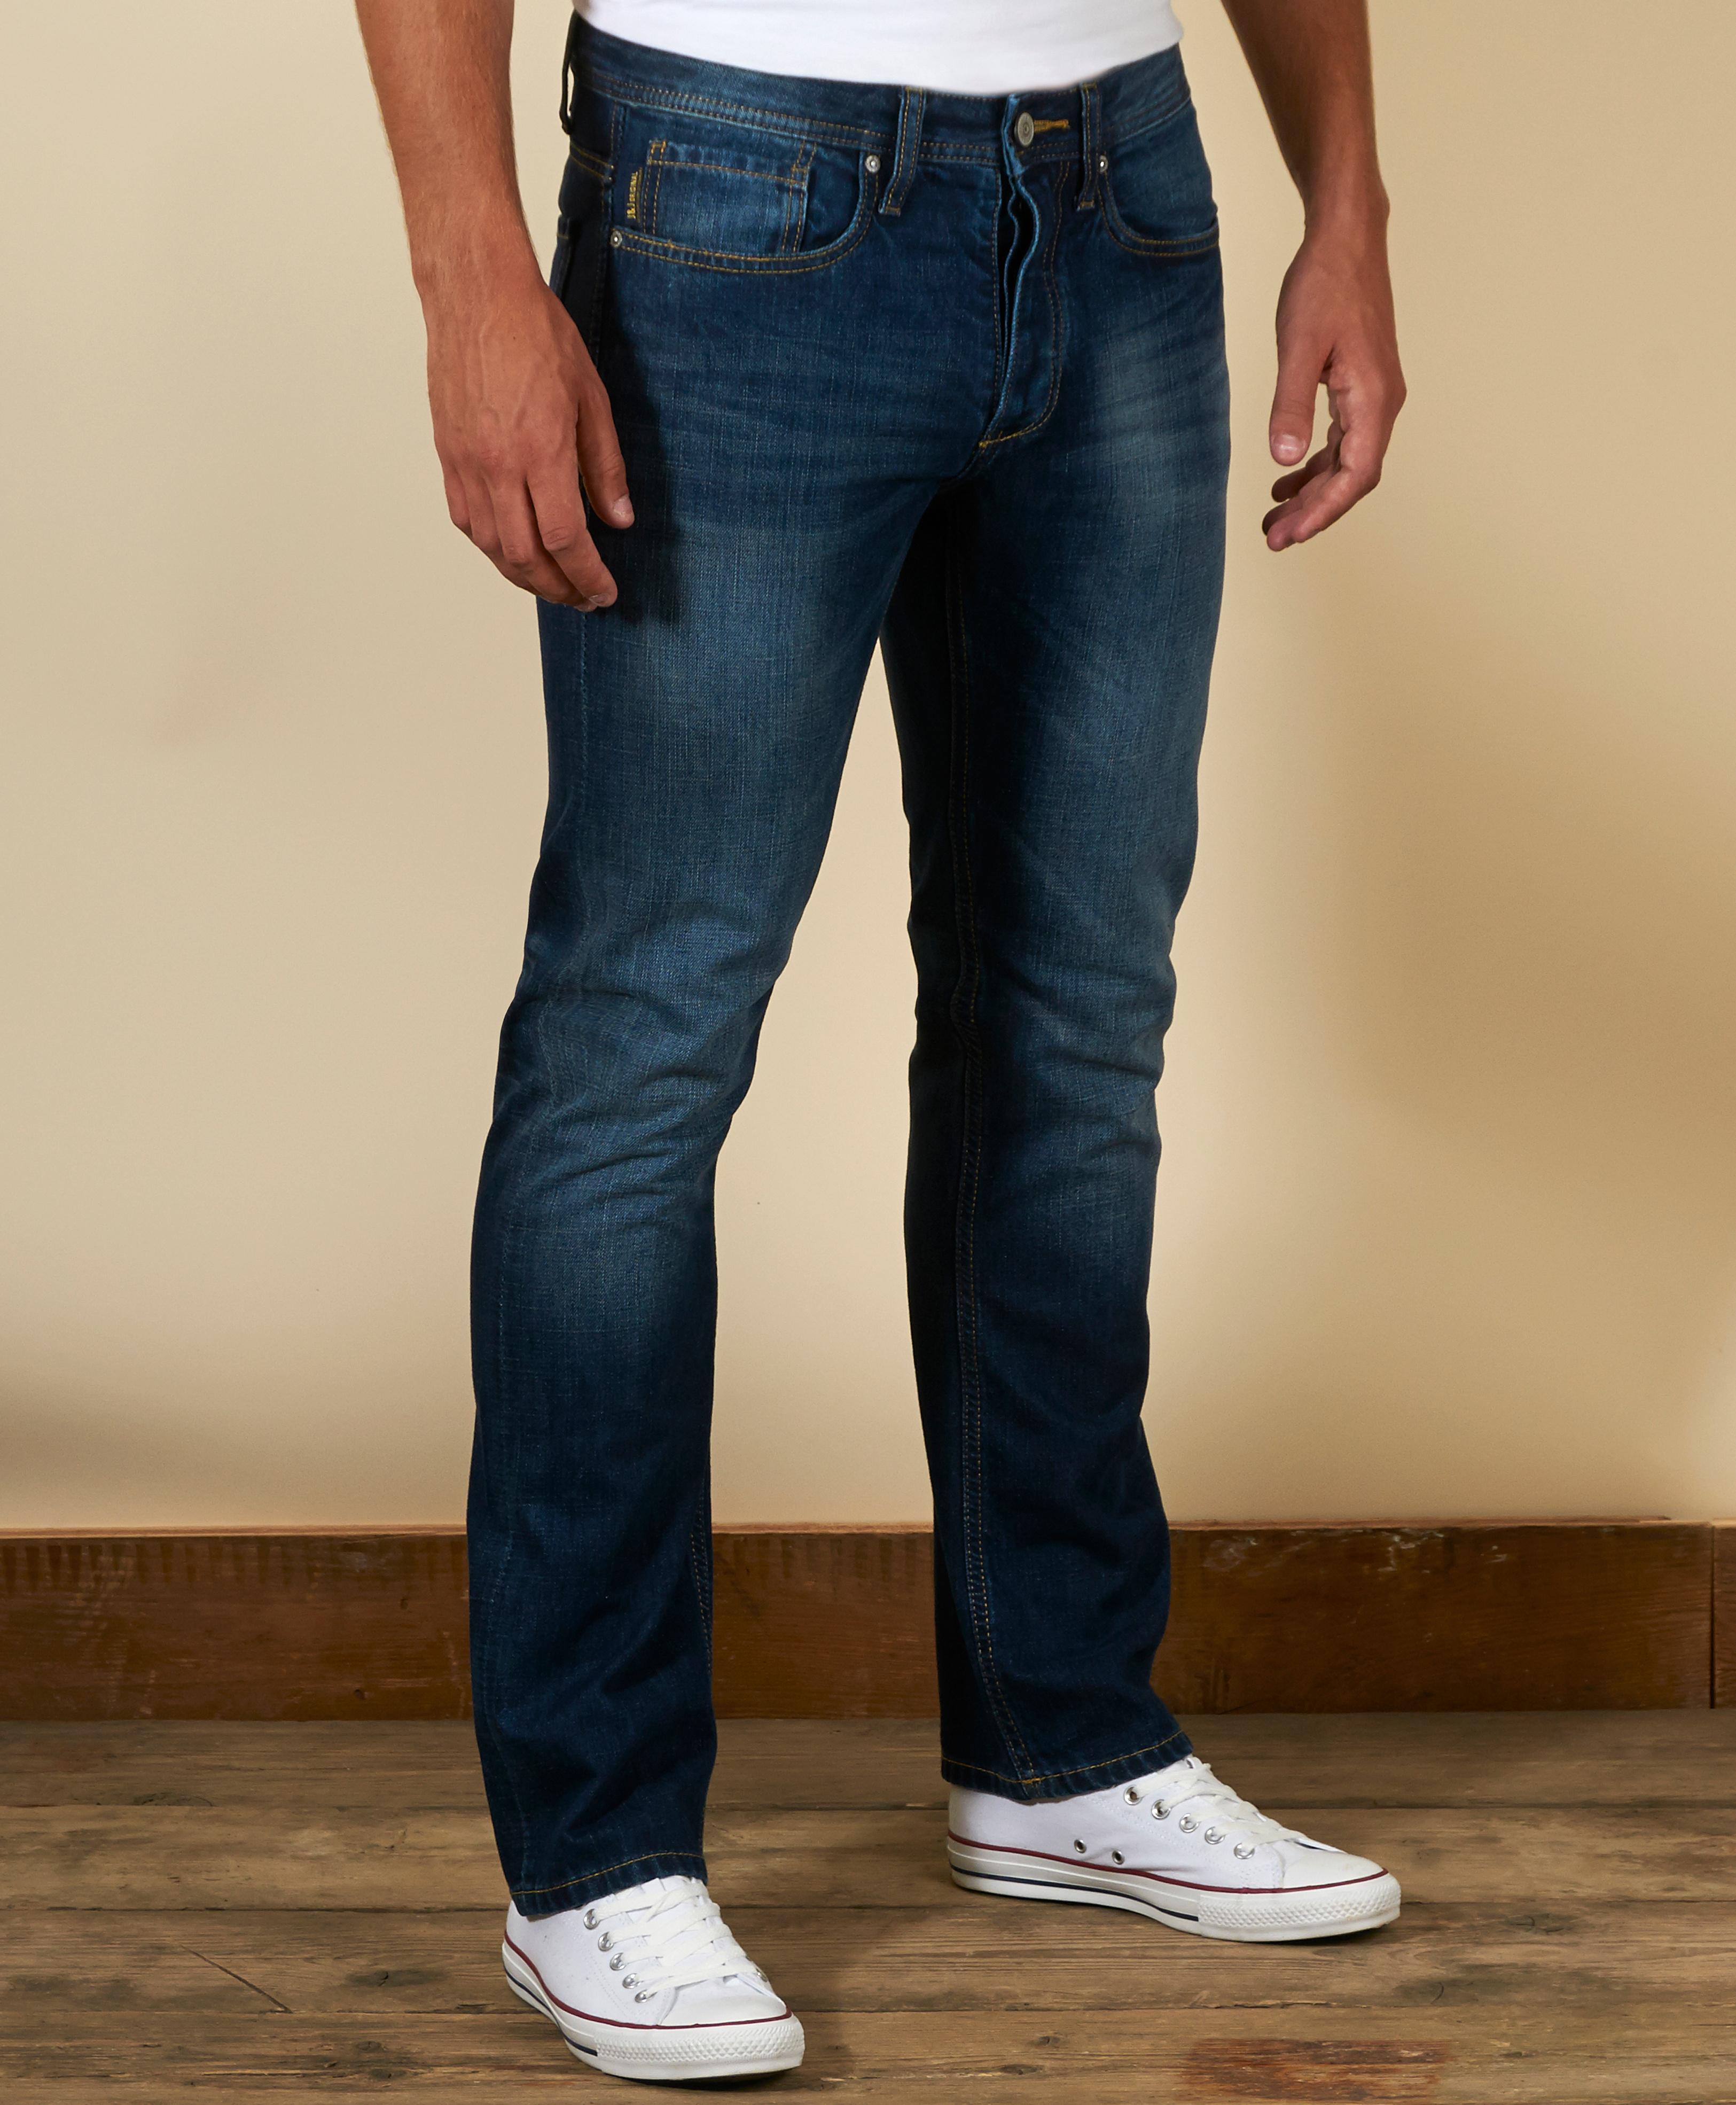 jack & jones clark original jj 903 regular fit jeans